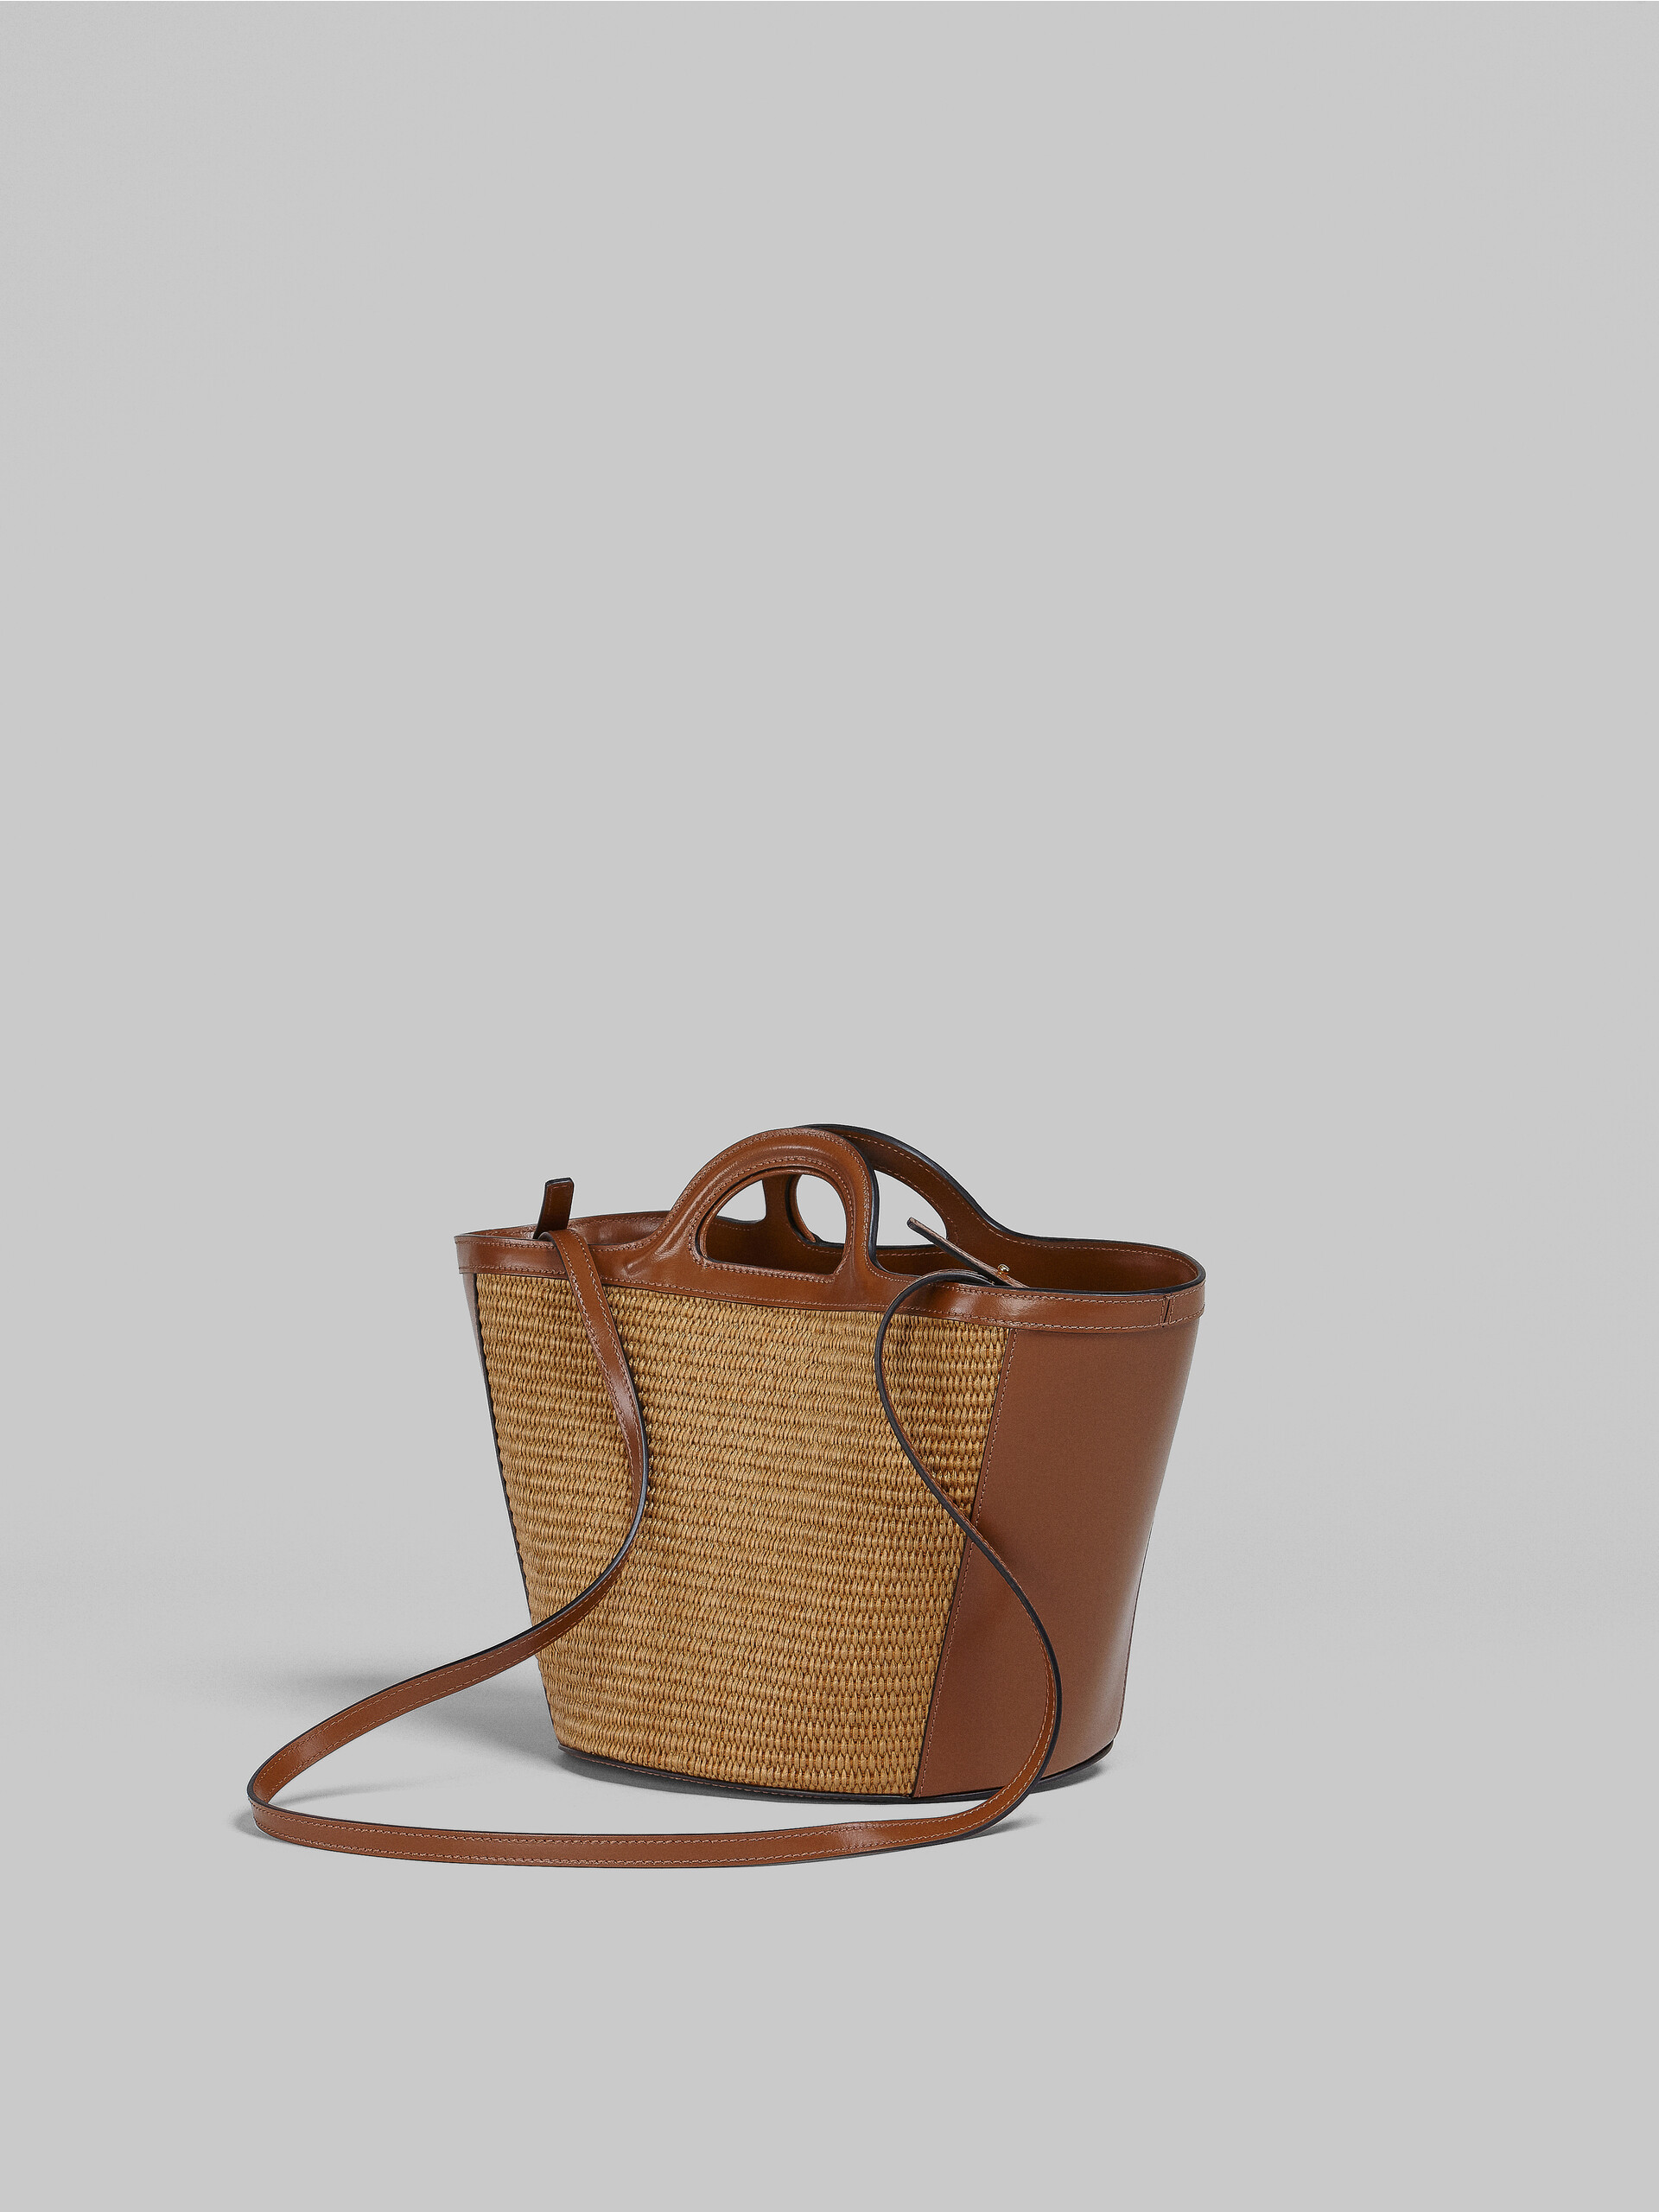 TROPICALIA small bag in brown leather and raffia - Handbags - Image 3